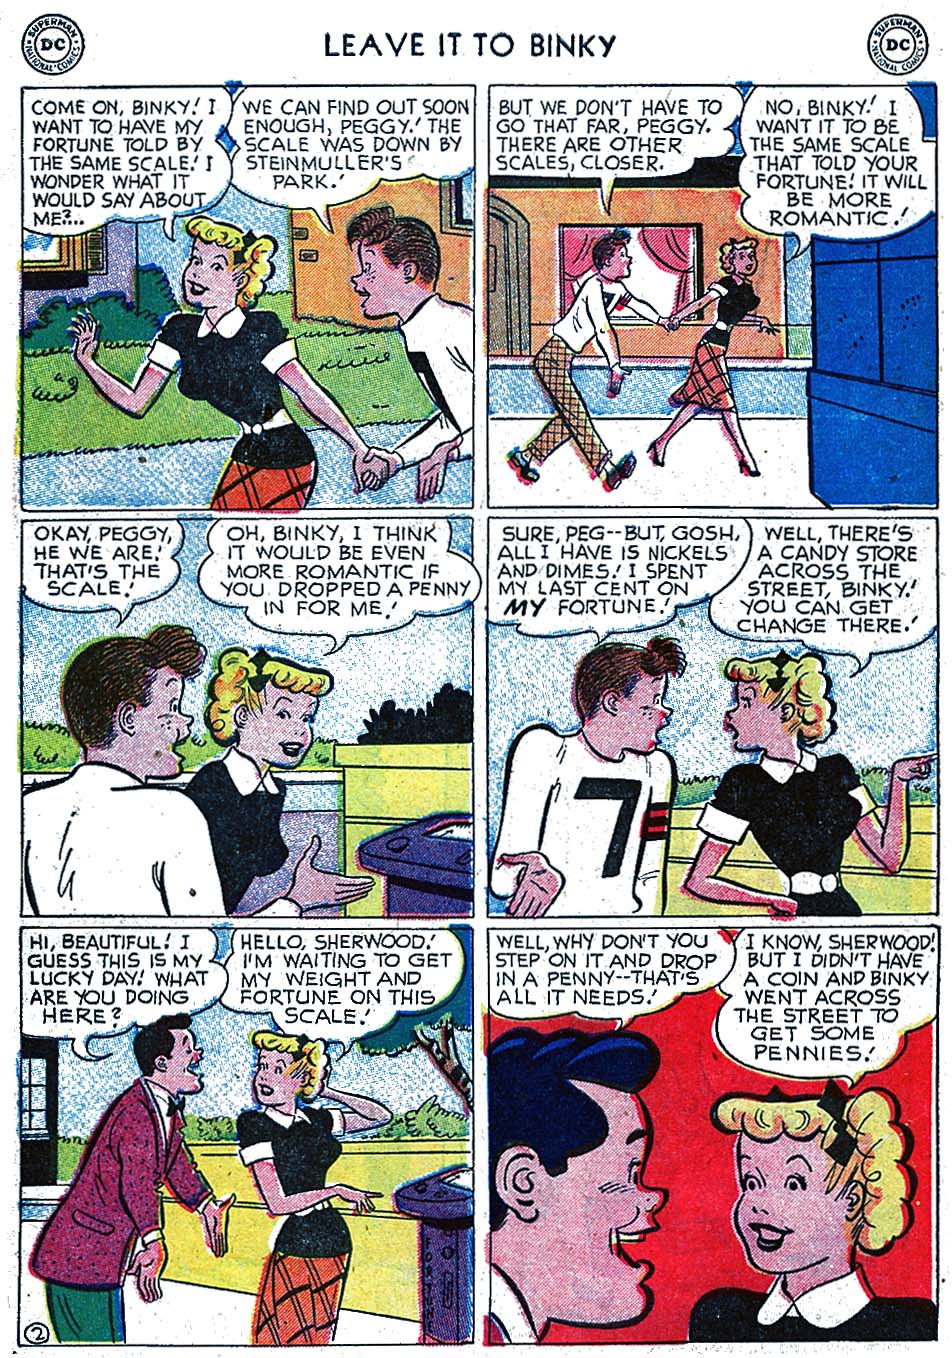 Read online Leave it to Binky comic -  Issue #37 - 12